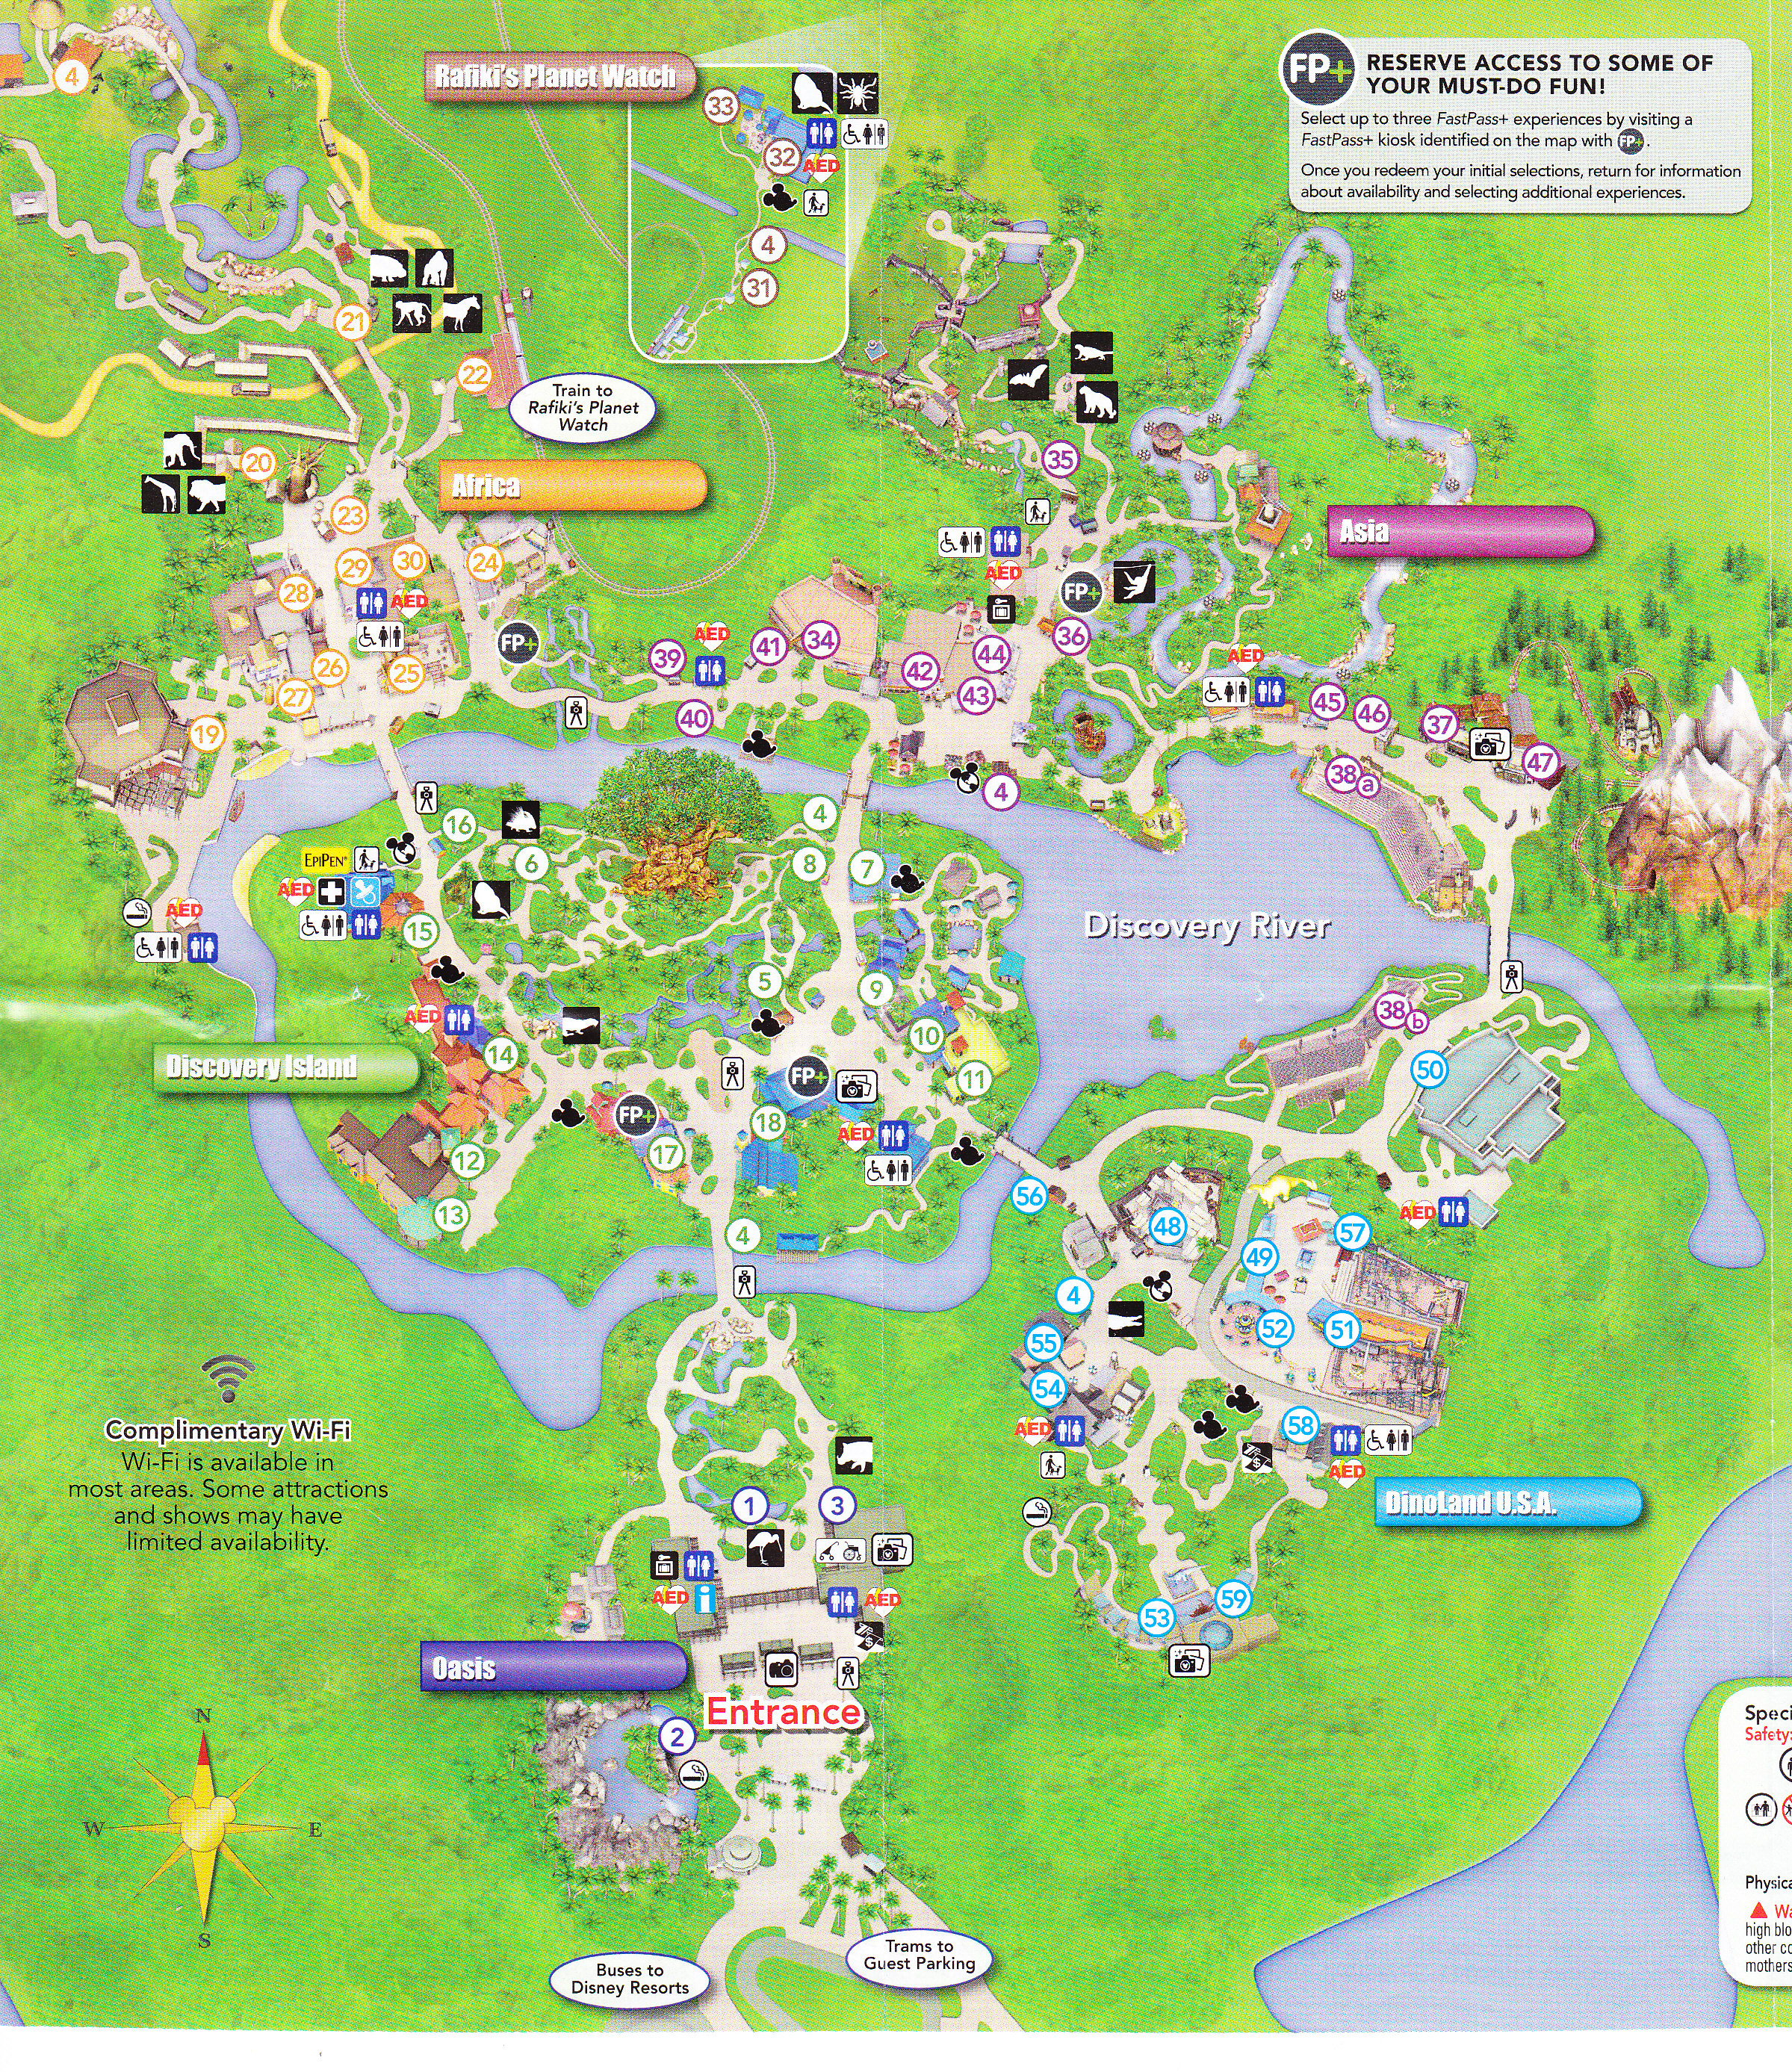 Disney's Animal Kingdom 2016 Park Map